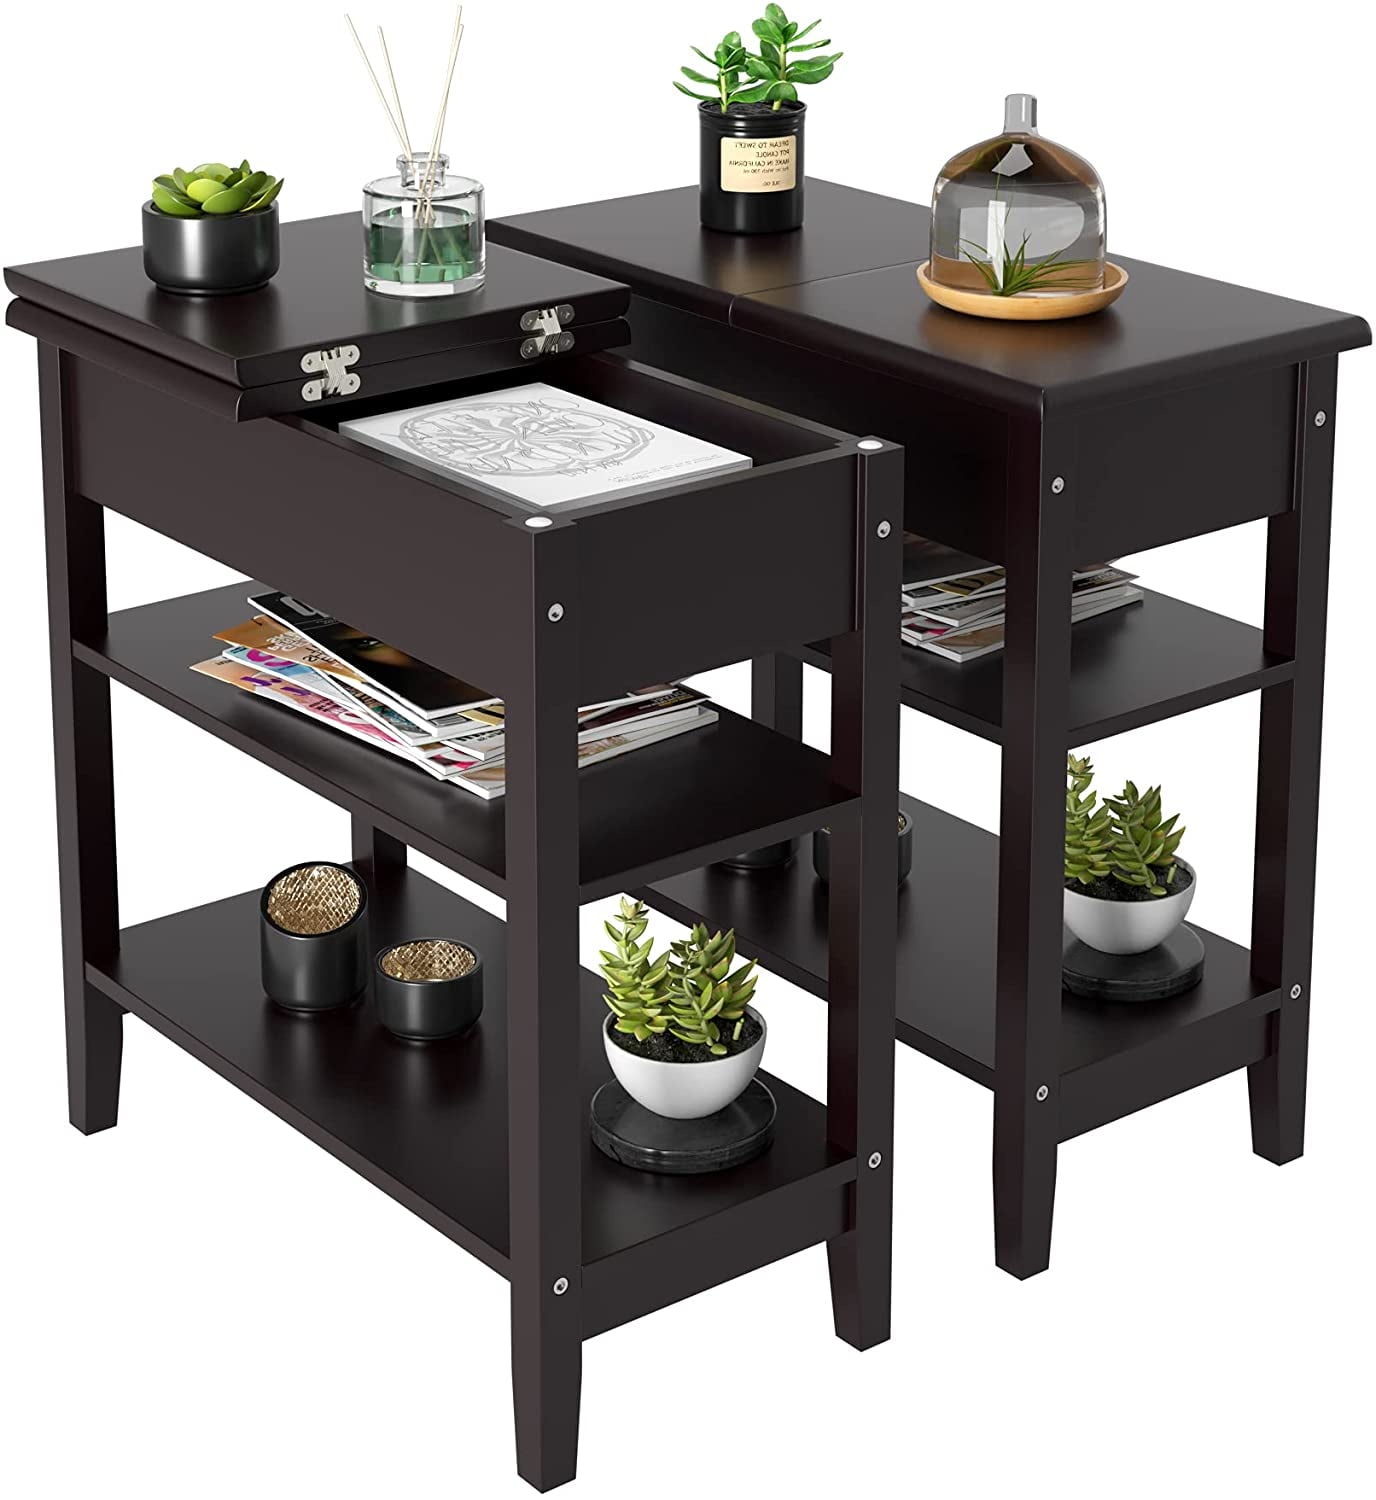 Slim End Tables Wooden Narrow w Drink Holders & Shelves Shelf Furniture 2 Colors 